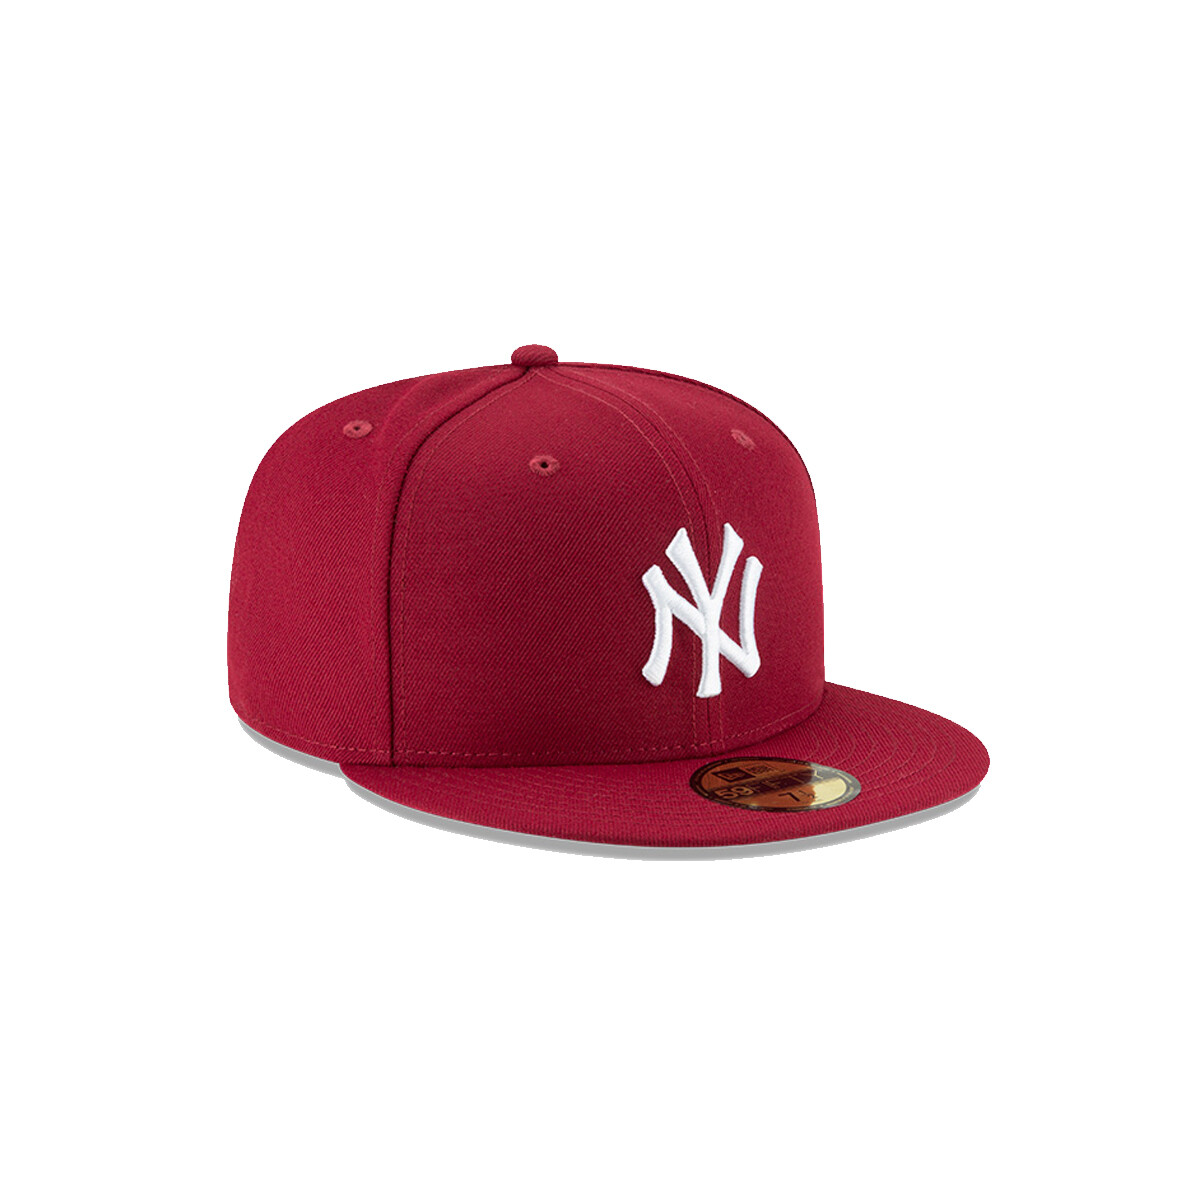 Gorro New Era - New York Yankees MLB 59Fifty - 11591126 - BORDEAUX 